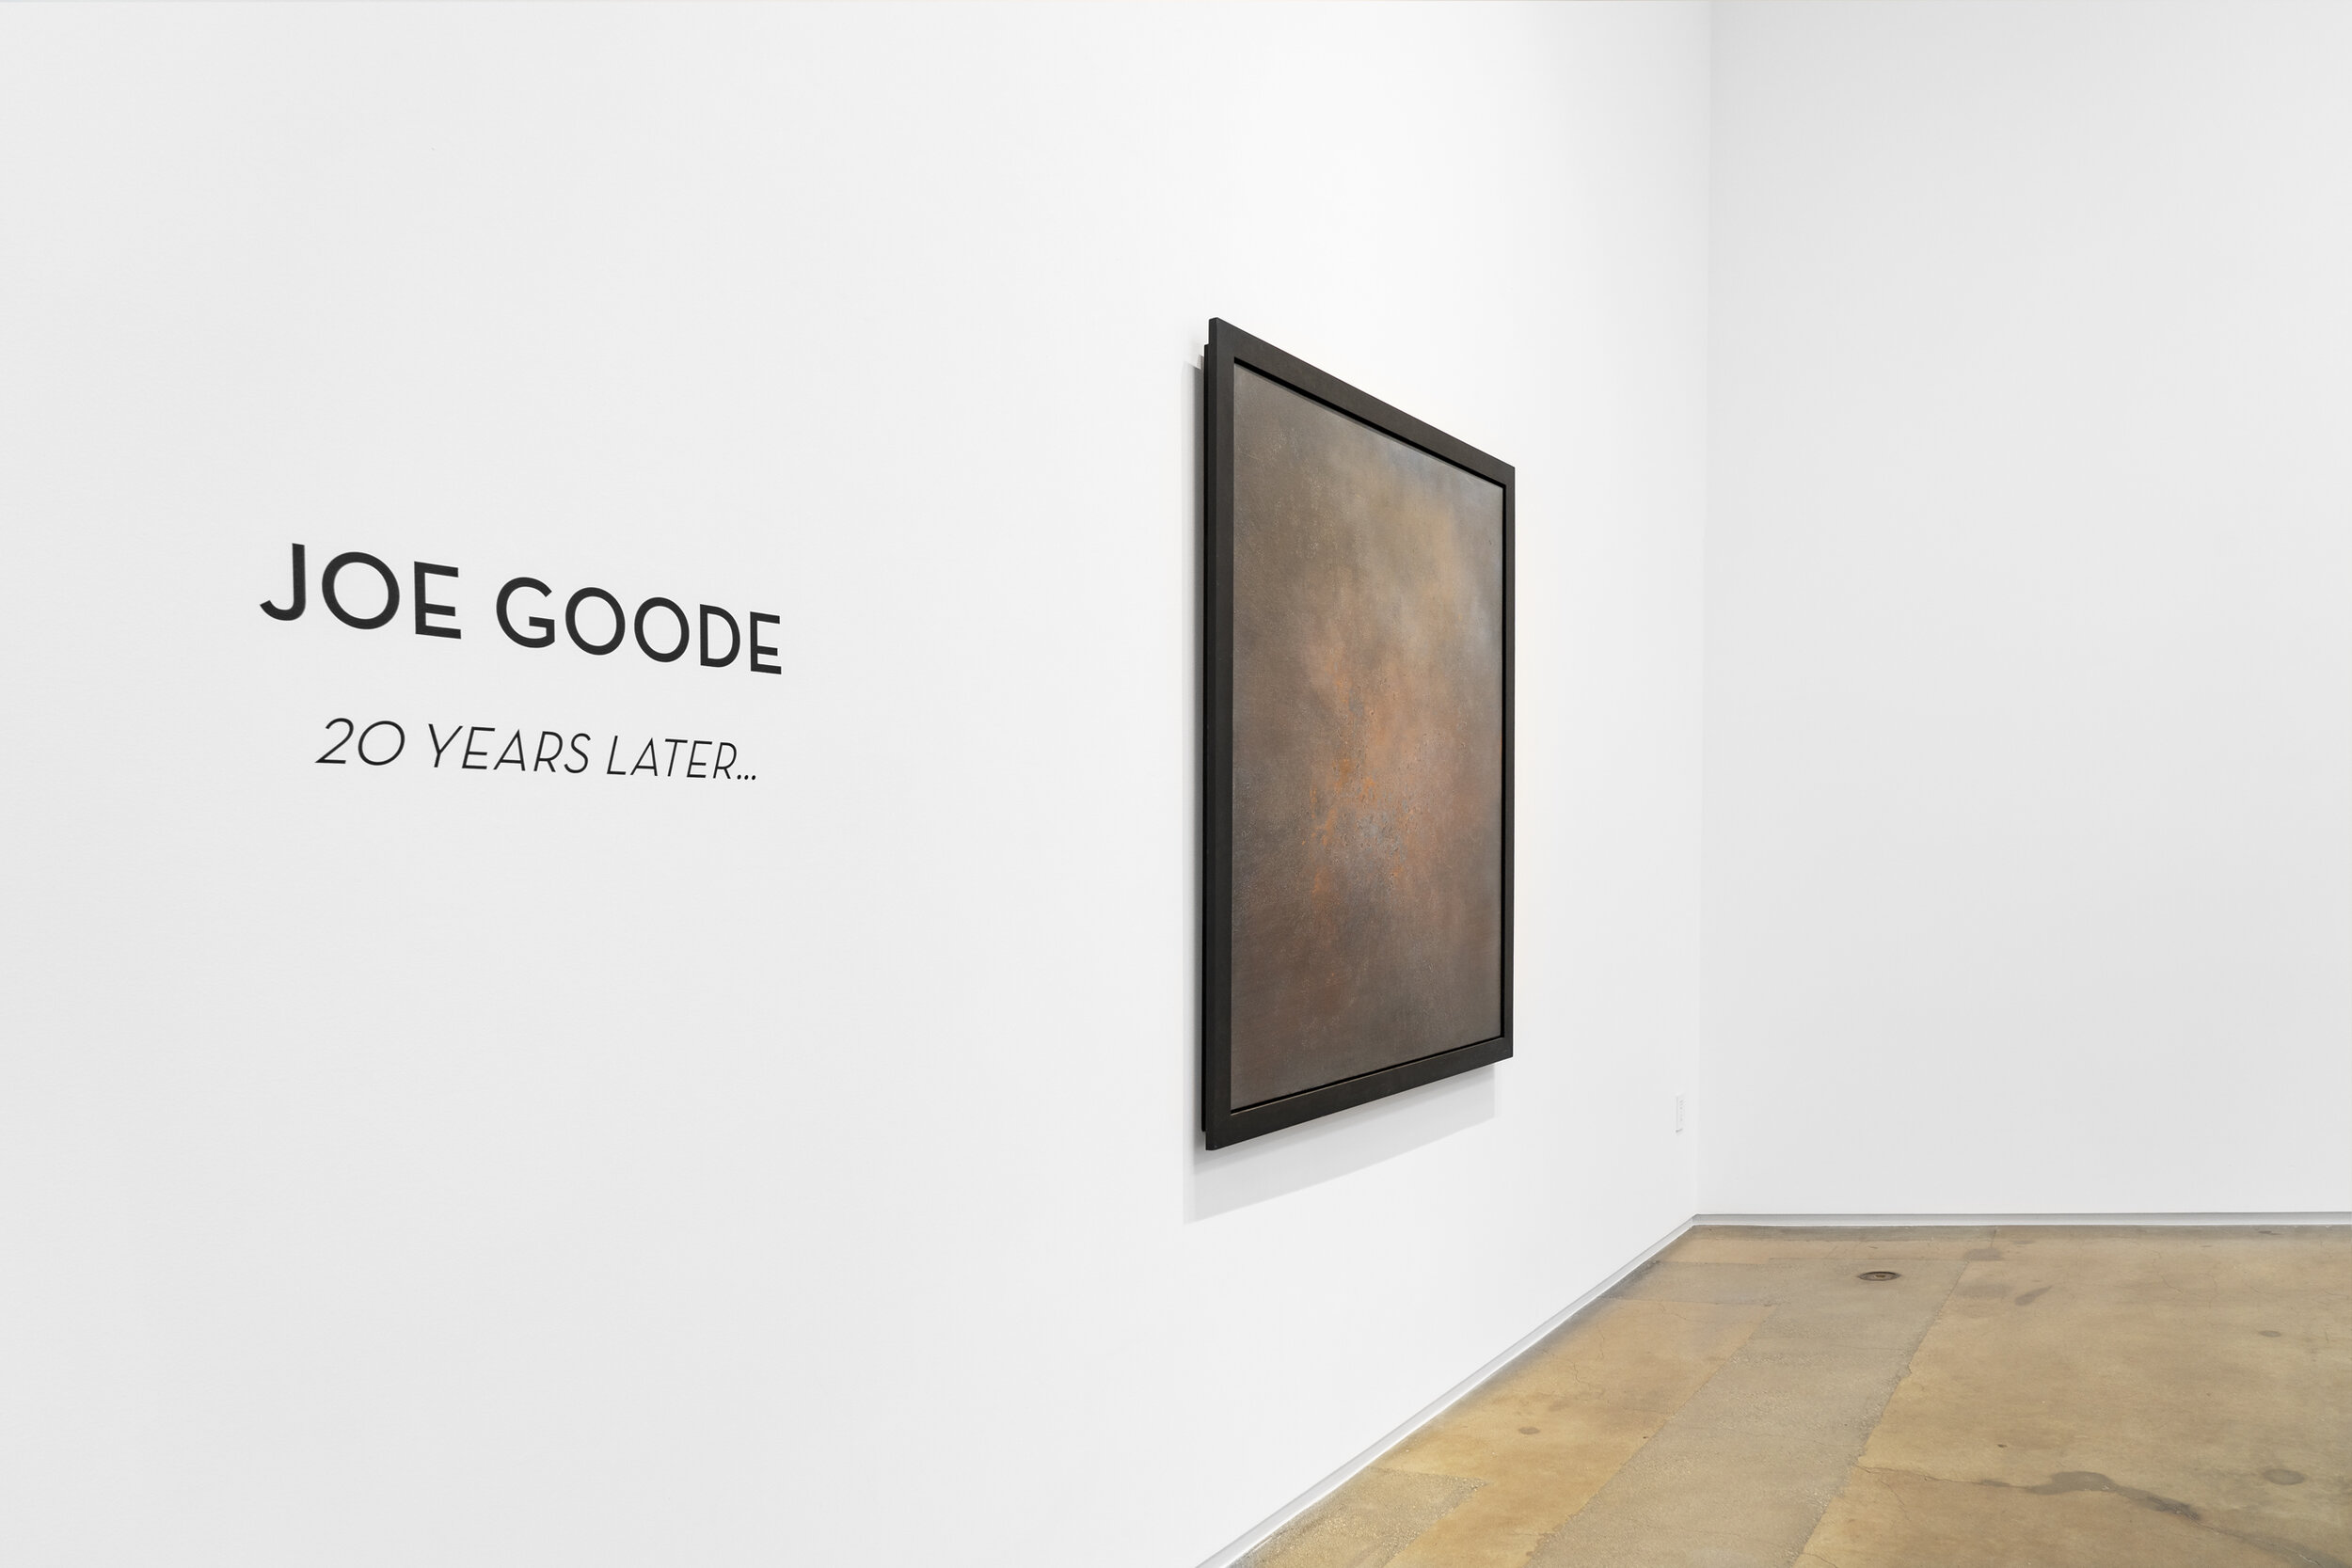 Joe Goode "Twenty Years Later..." Installation view